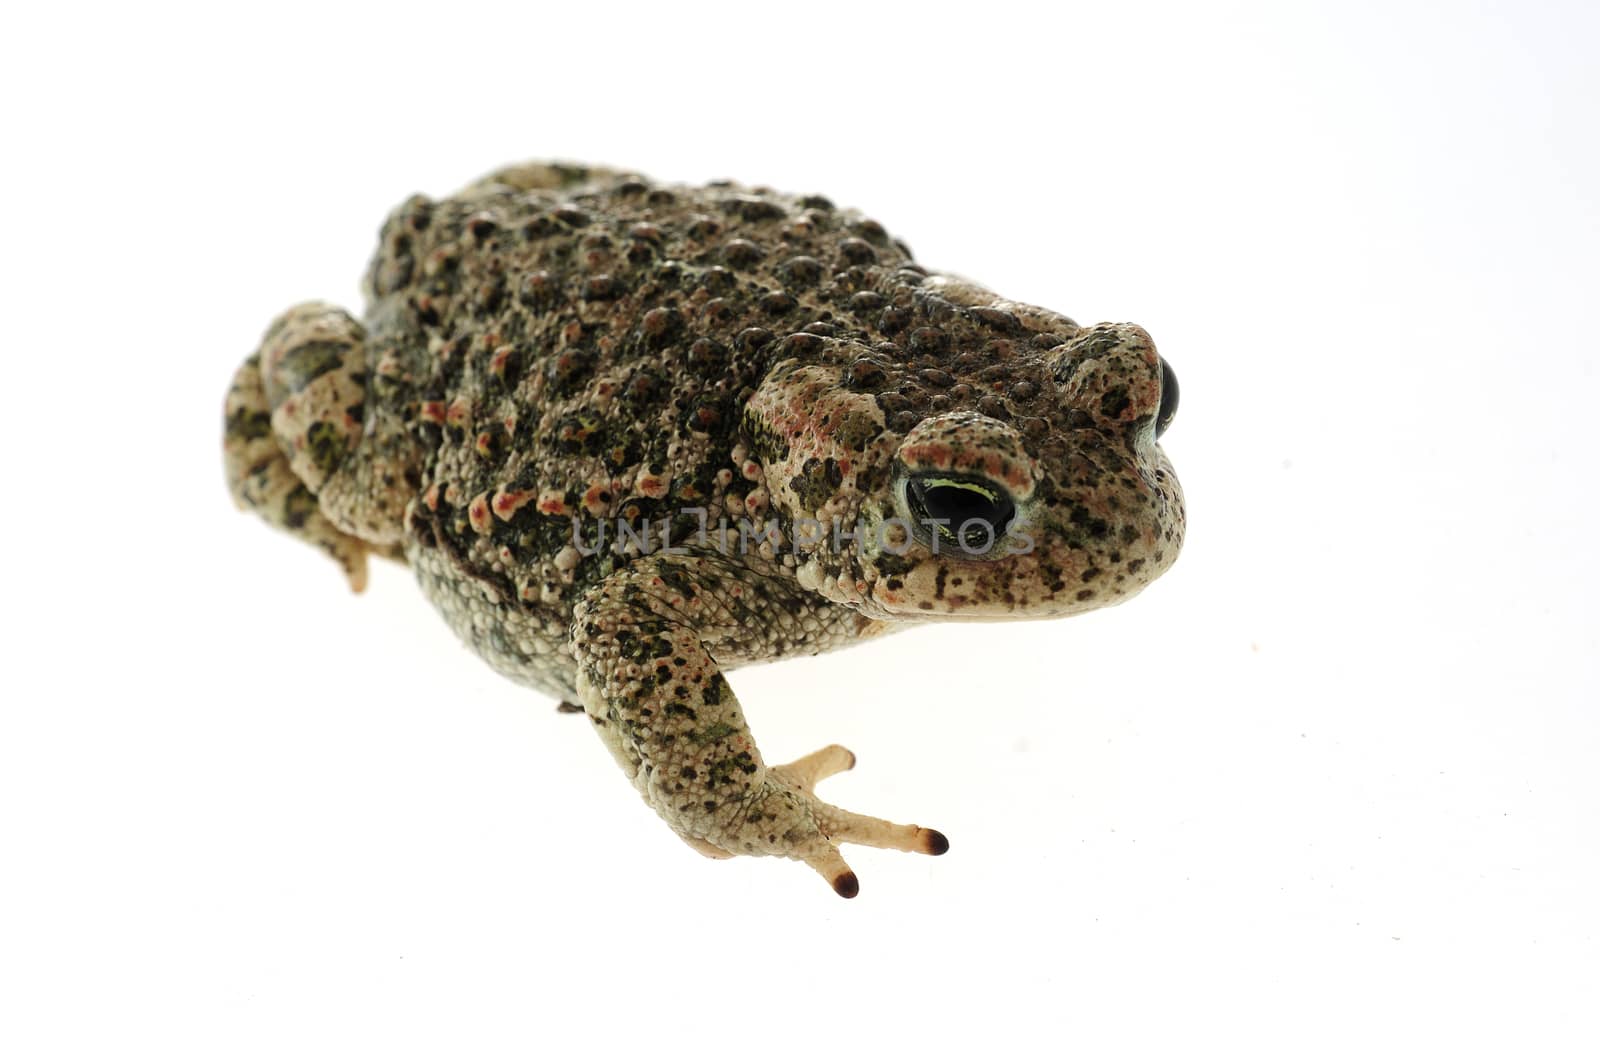 Natterjack toad (Epidalea calamita) with White background